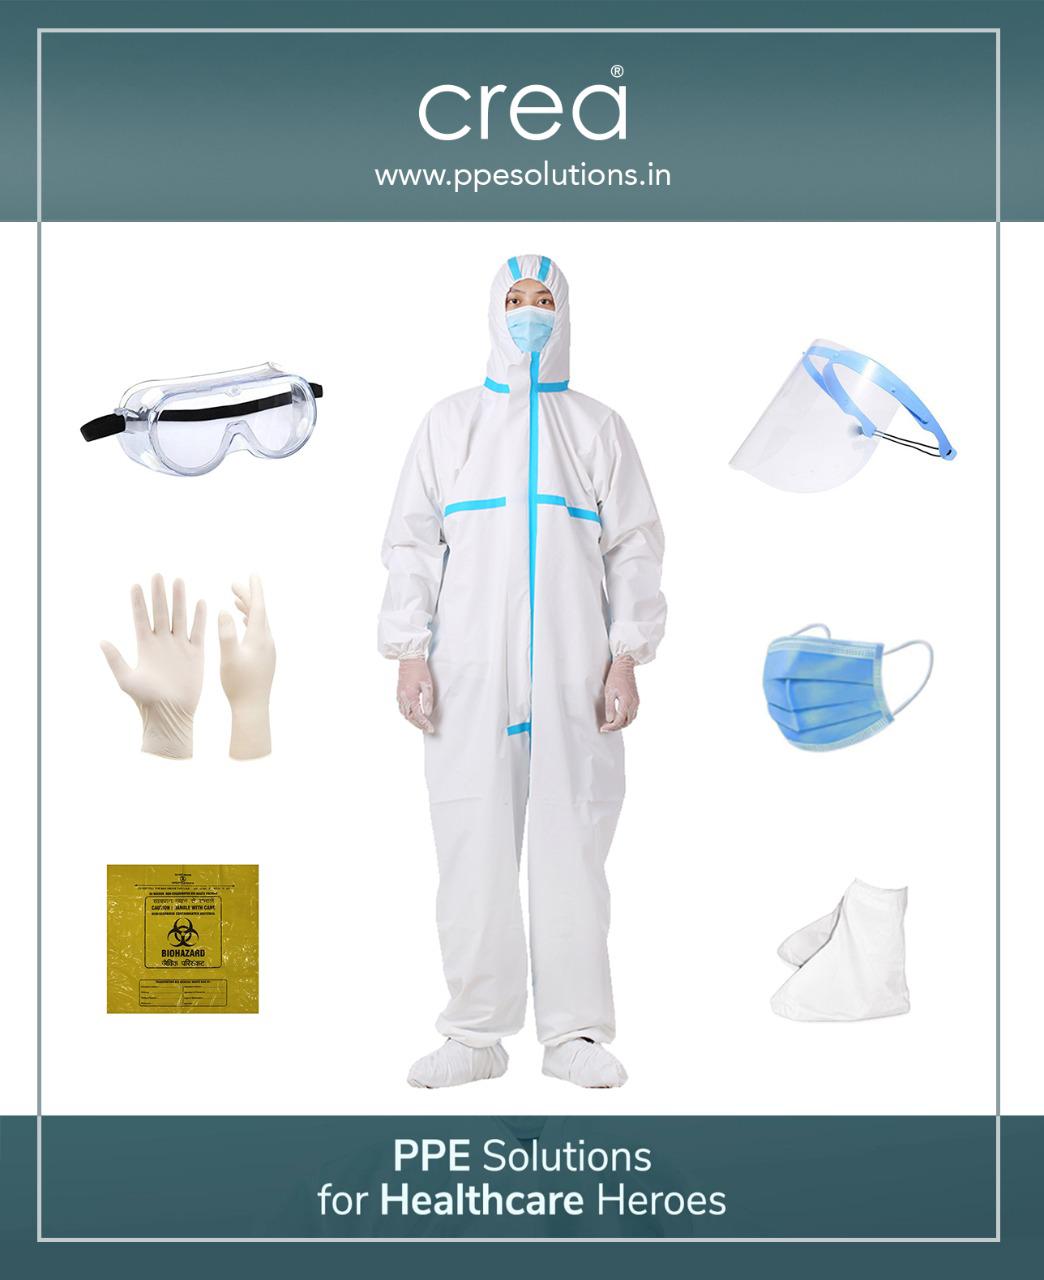 Crea PPE Solutions